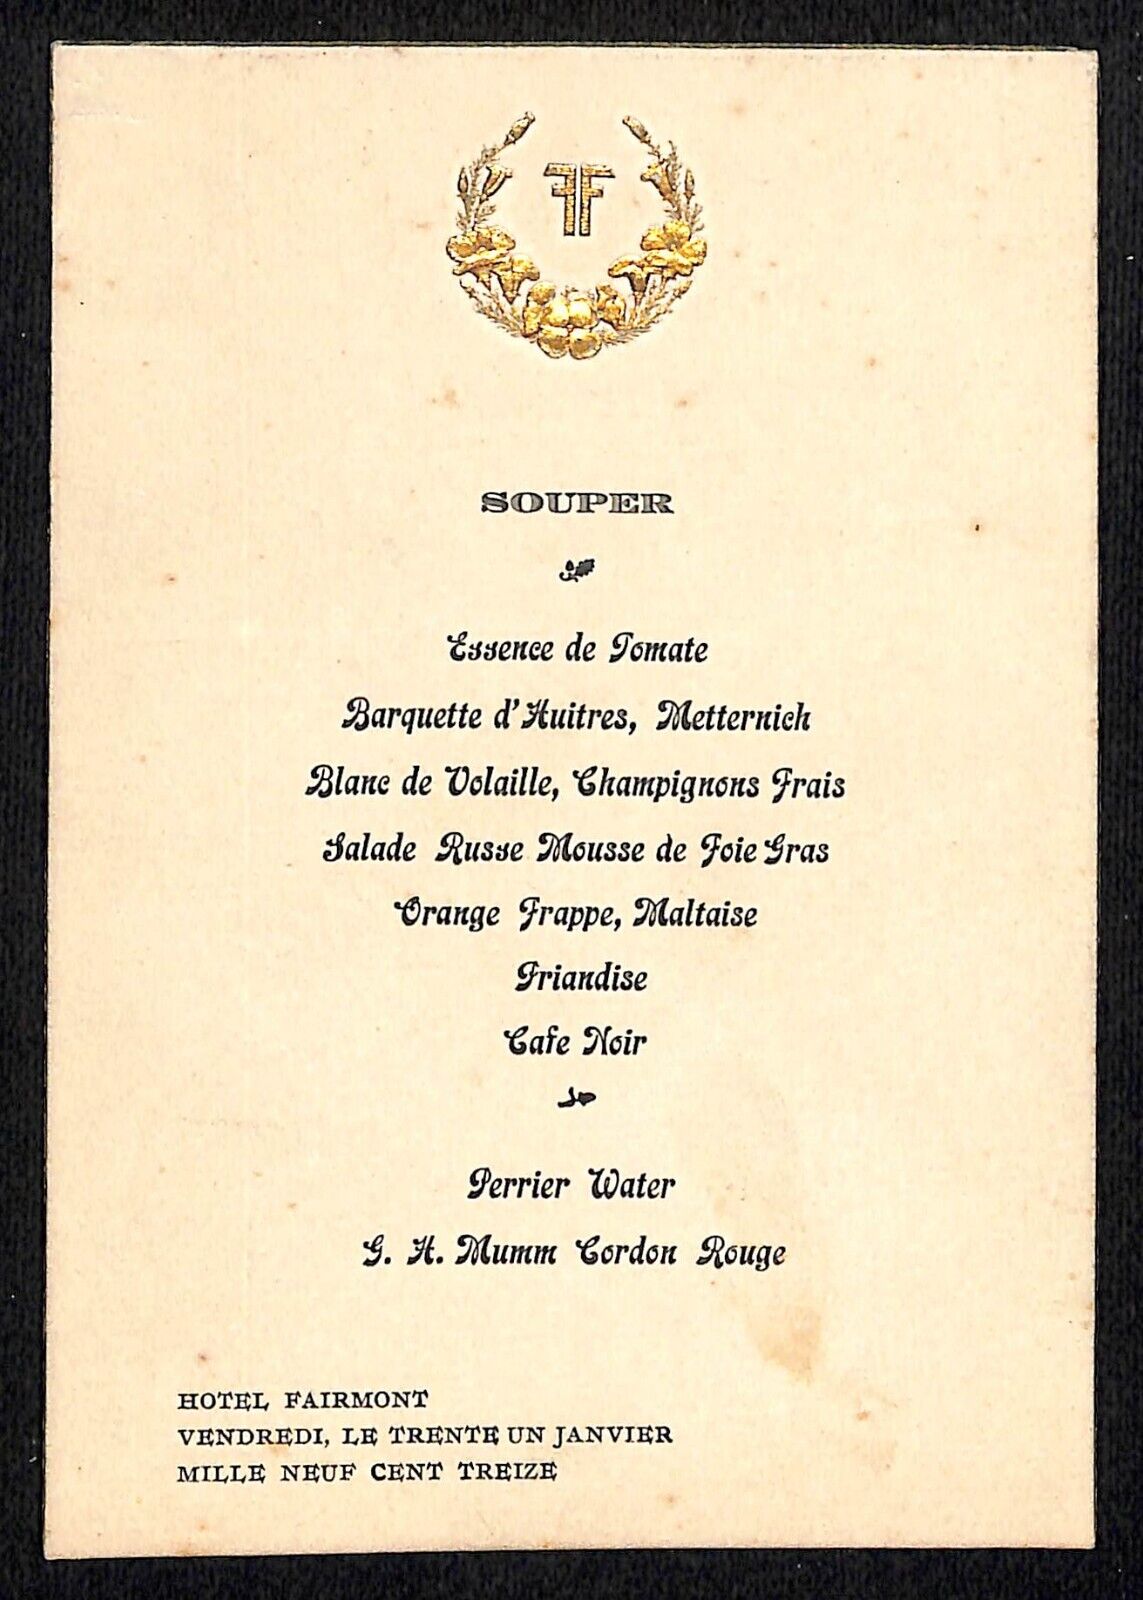 Hotel Fairmont 1913 San Francisco Supper Menu Card - Very Scarce